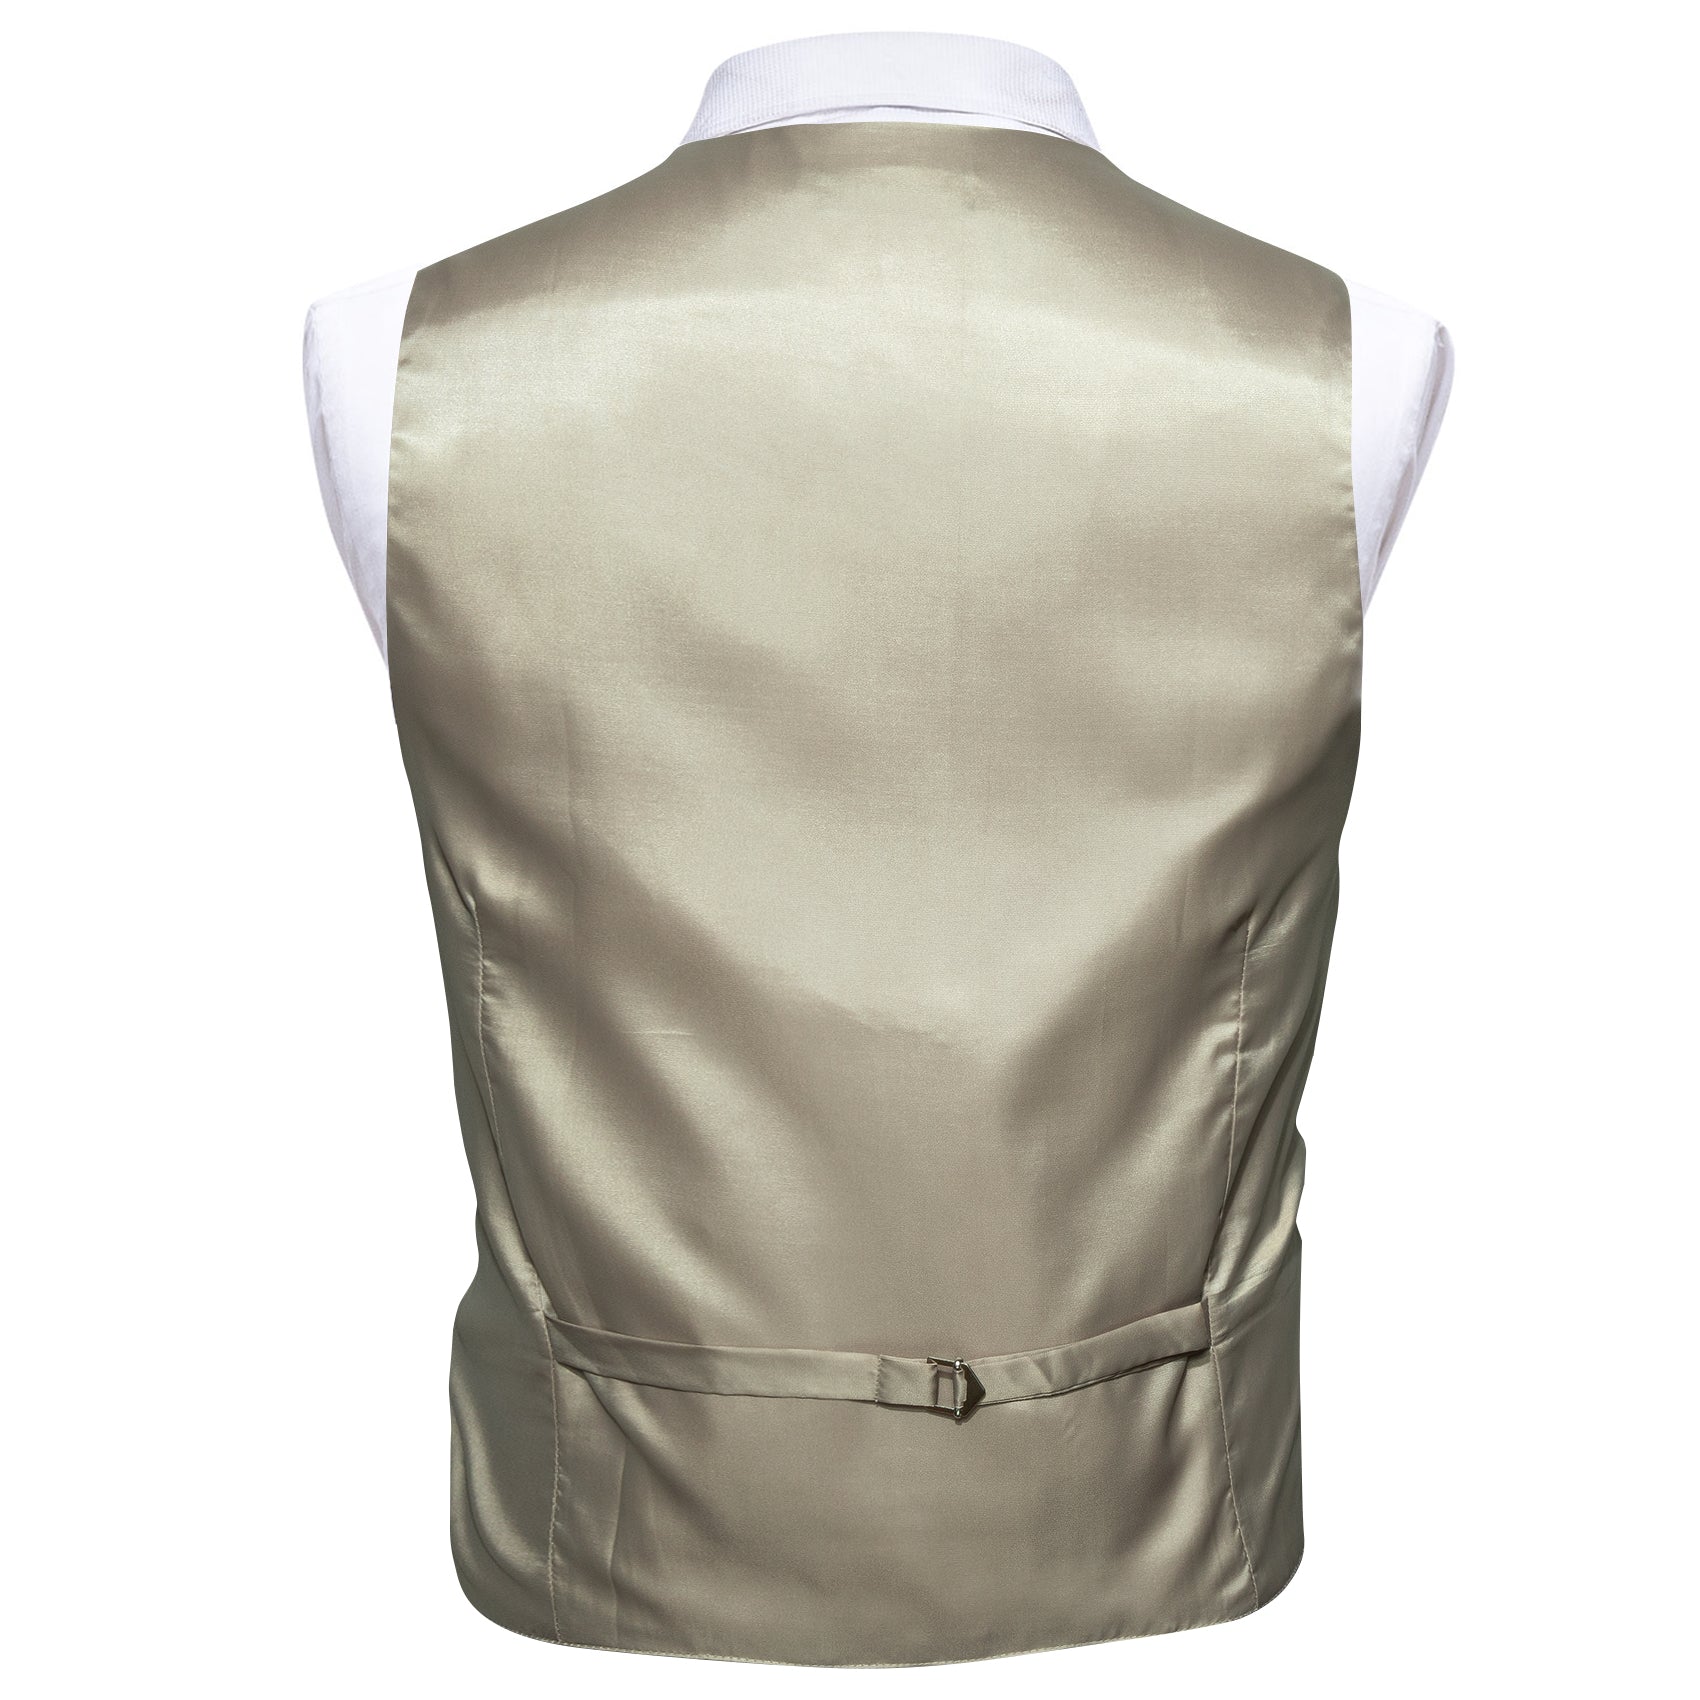 Men's Khaki Solid Silk V-Neck Waistcoat Vest